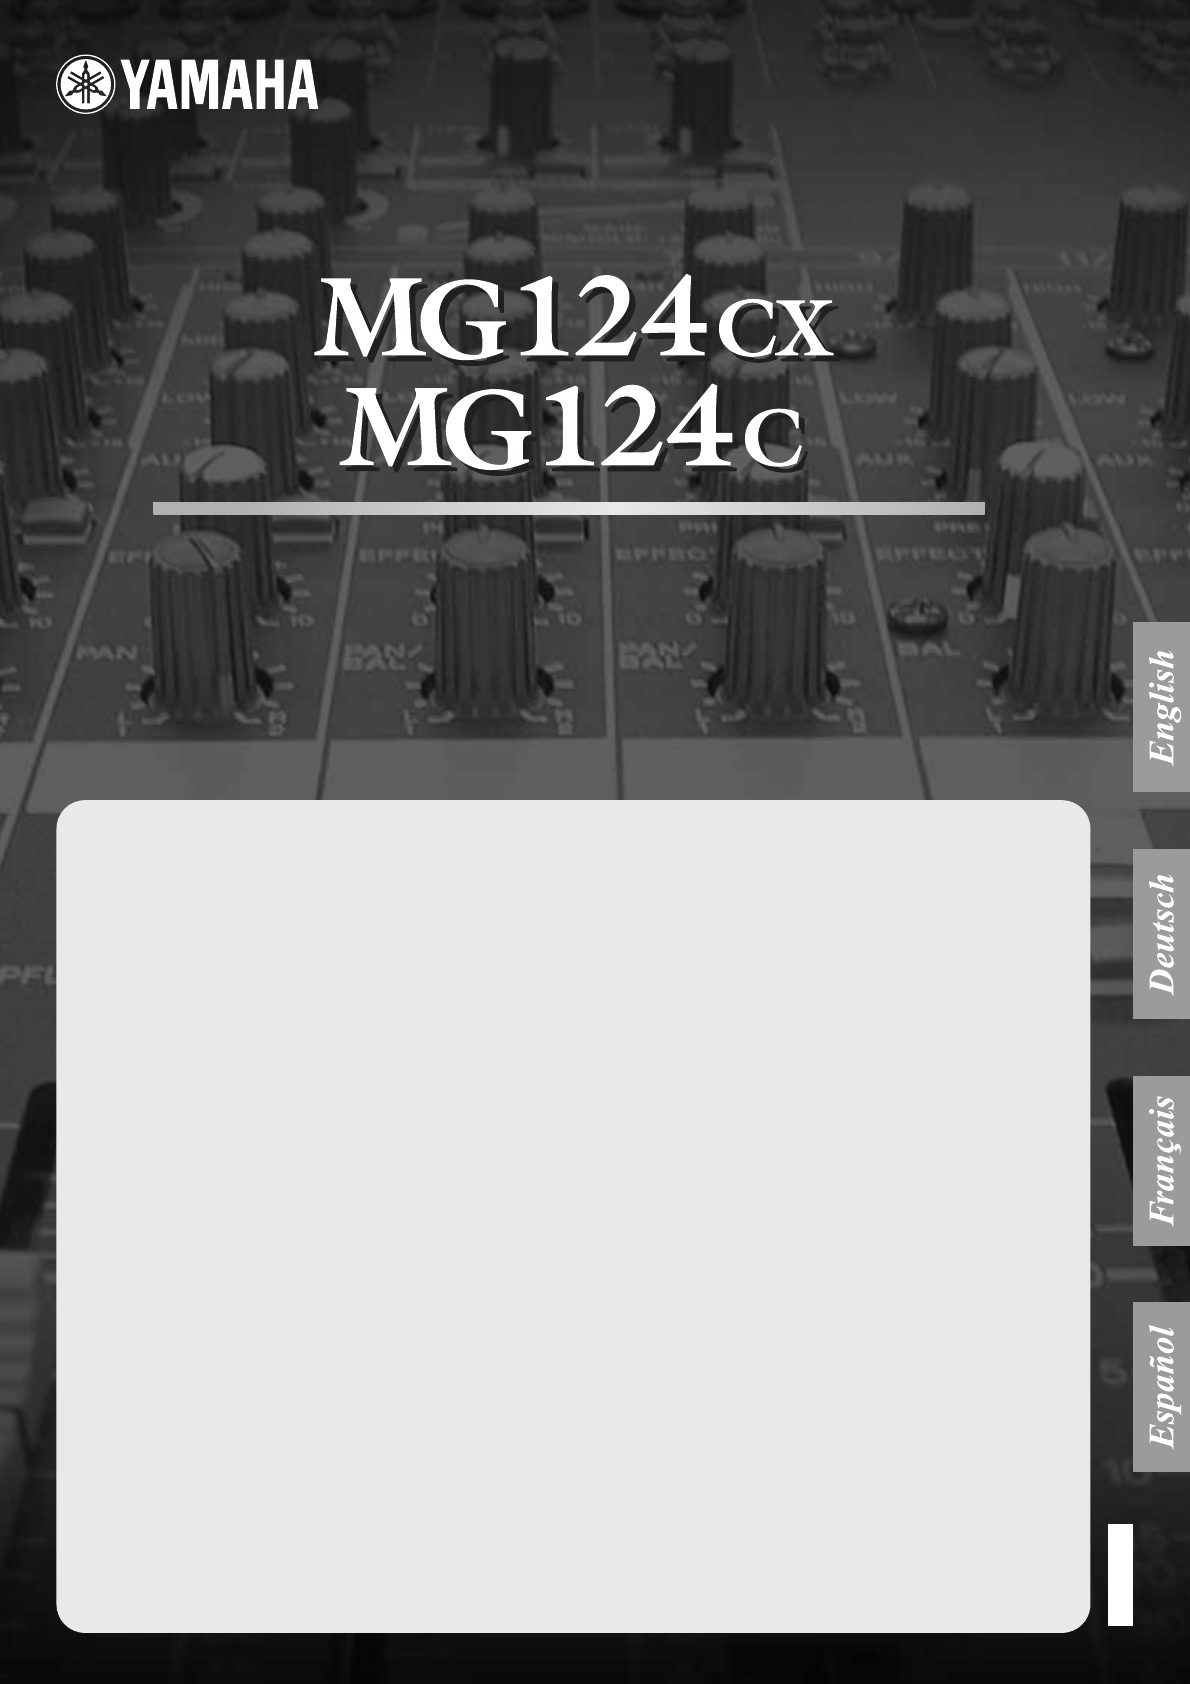 Manual Yamaha MG124CX (page 1 of 24) (English)